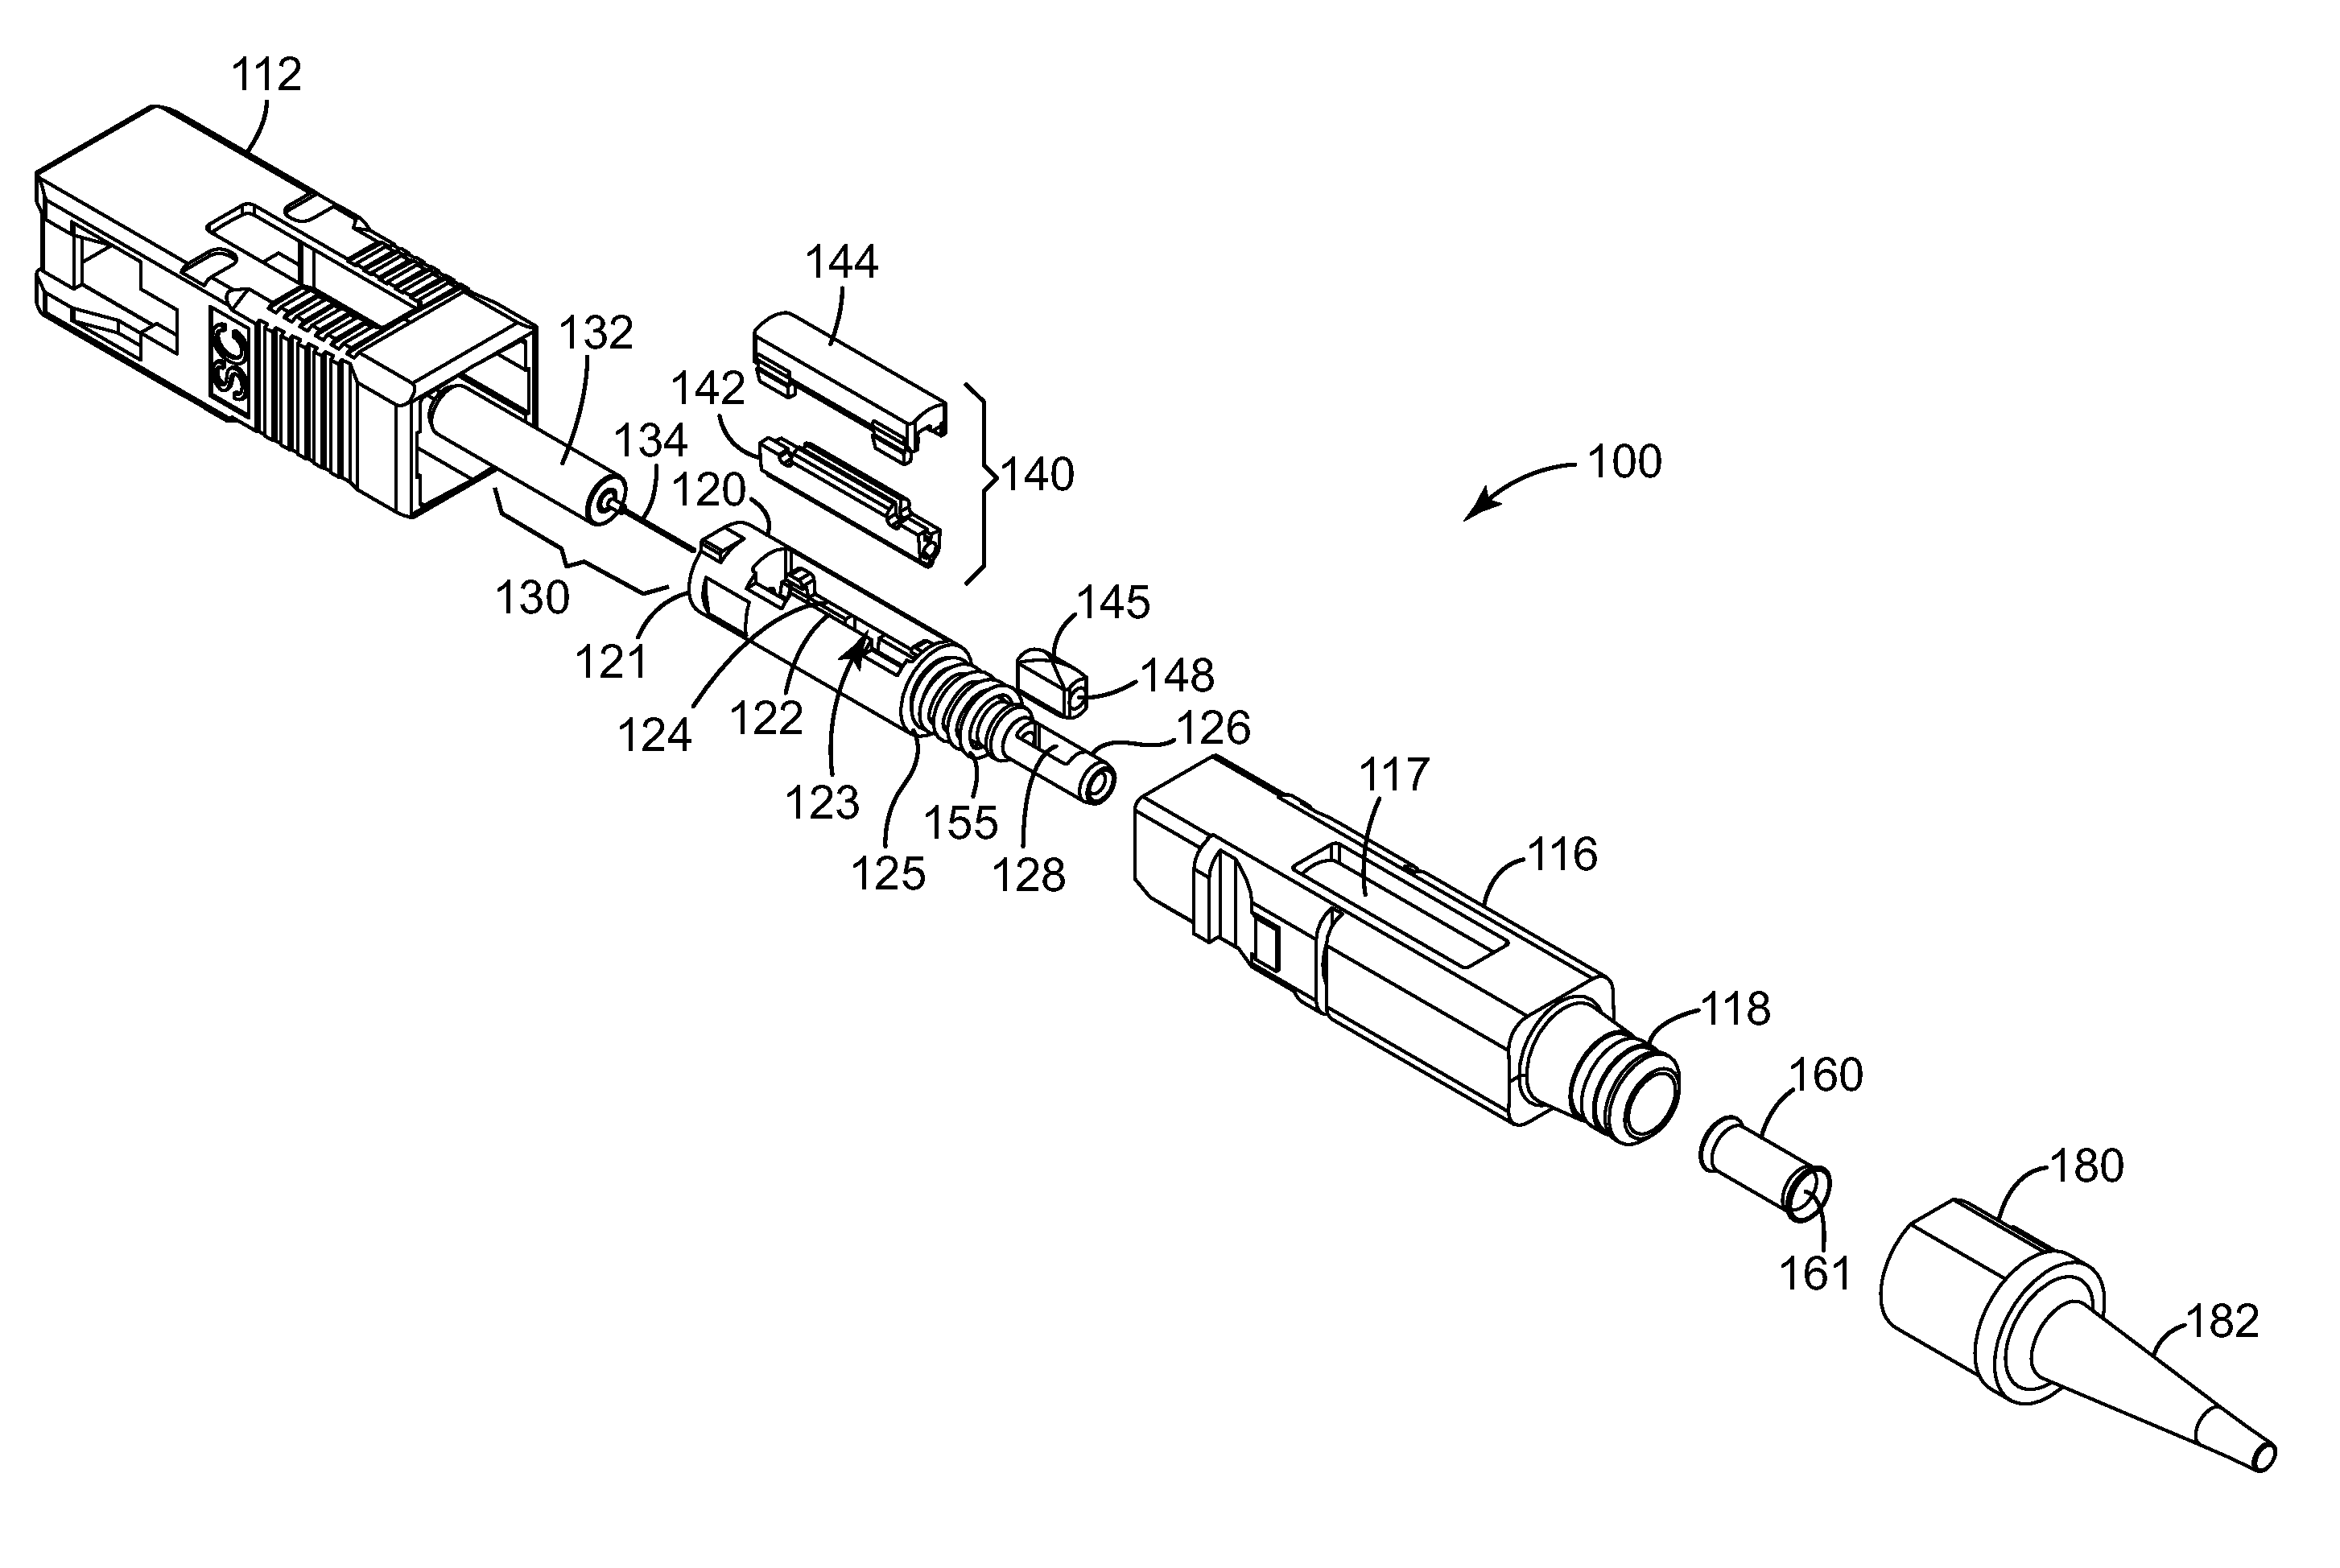 Optical connector and fiber distribution unit